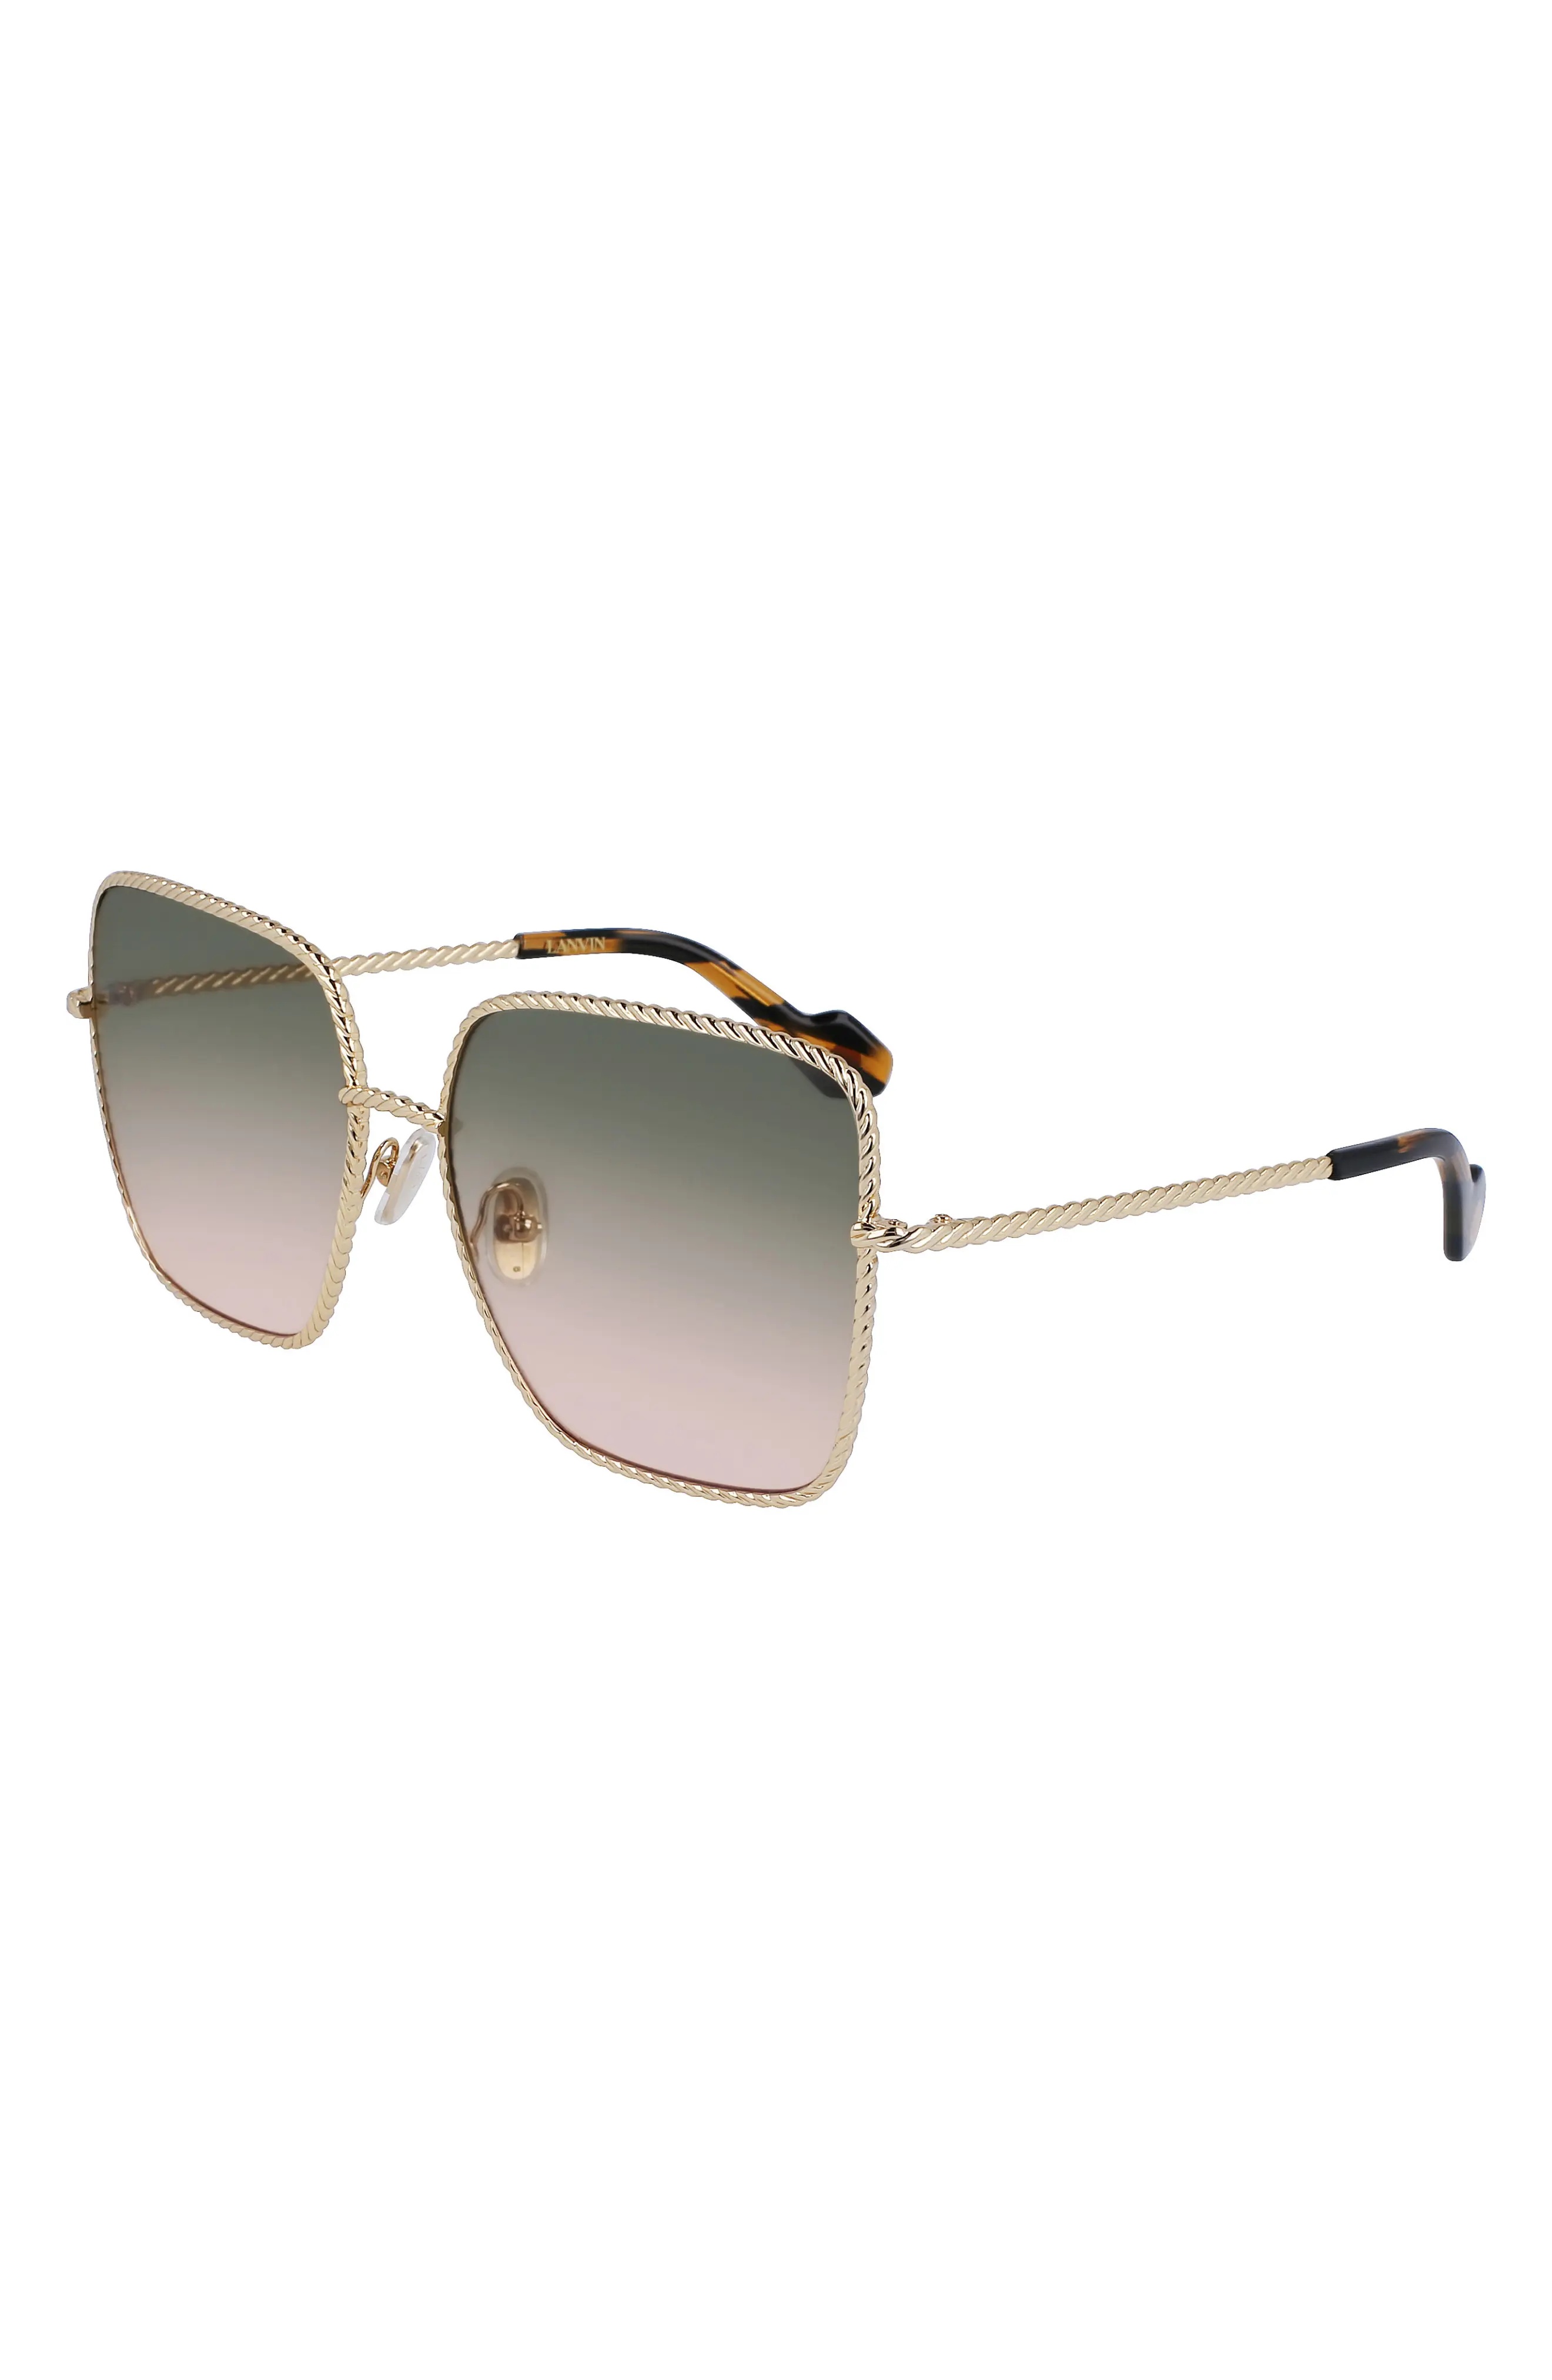 Babe 59mm Gradient Square Sunglasses in Gold/Gradient Green Peach - 2